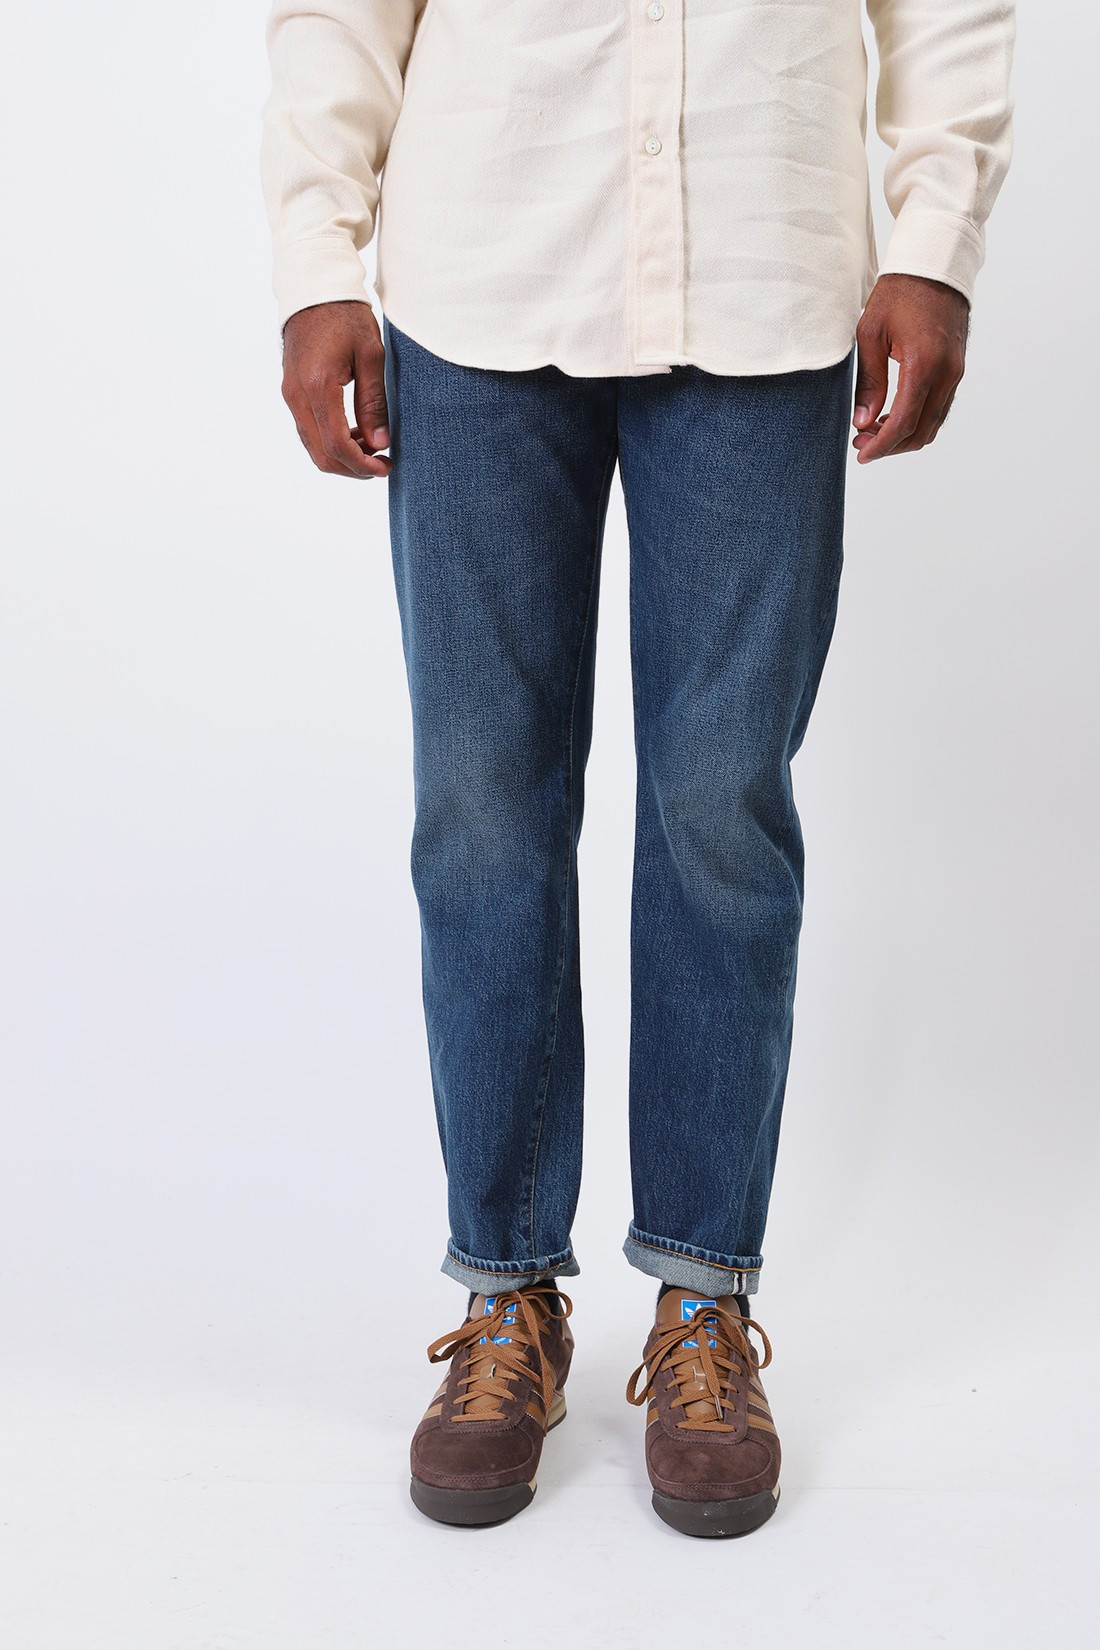 LEVI'S ® VINTAGE CLOTHING / 1954 501 jeans Still breath